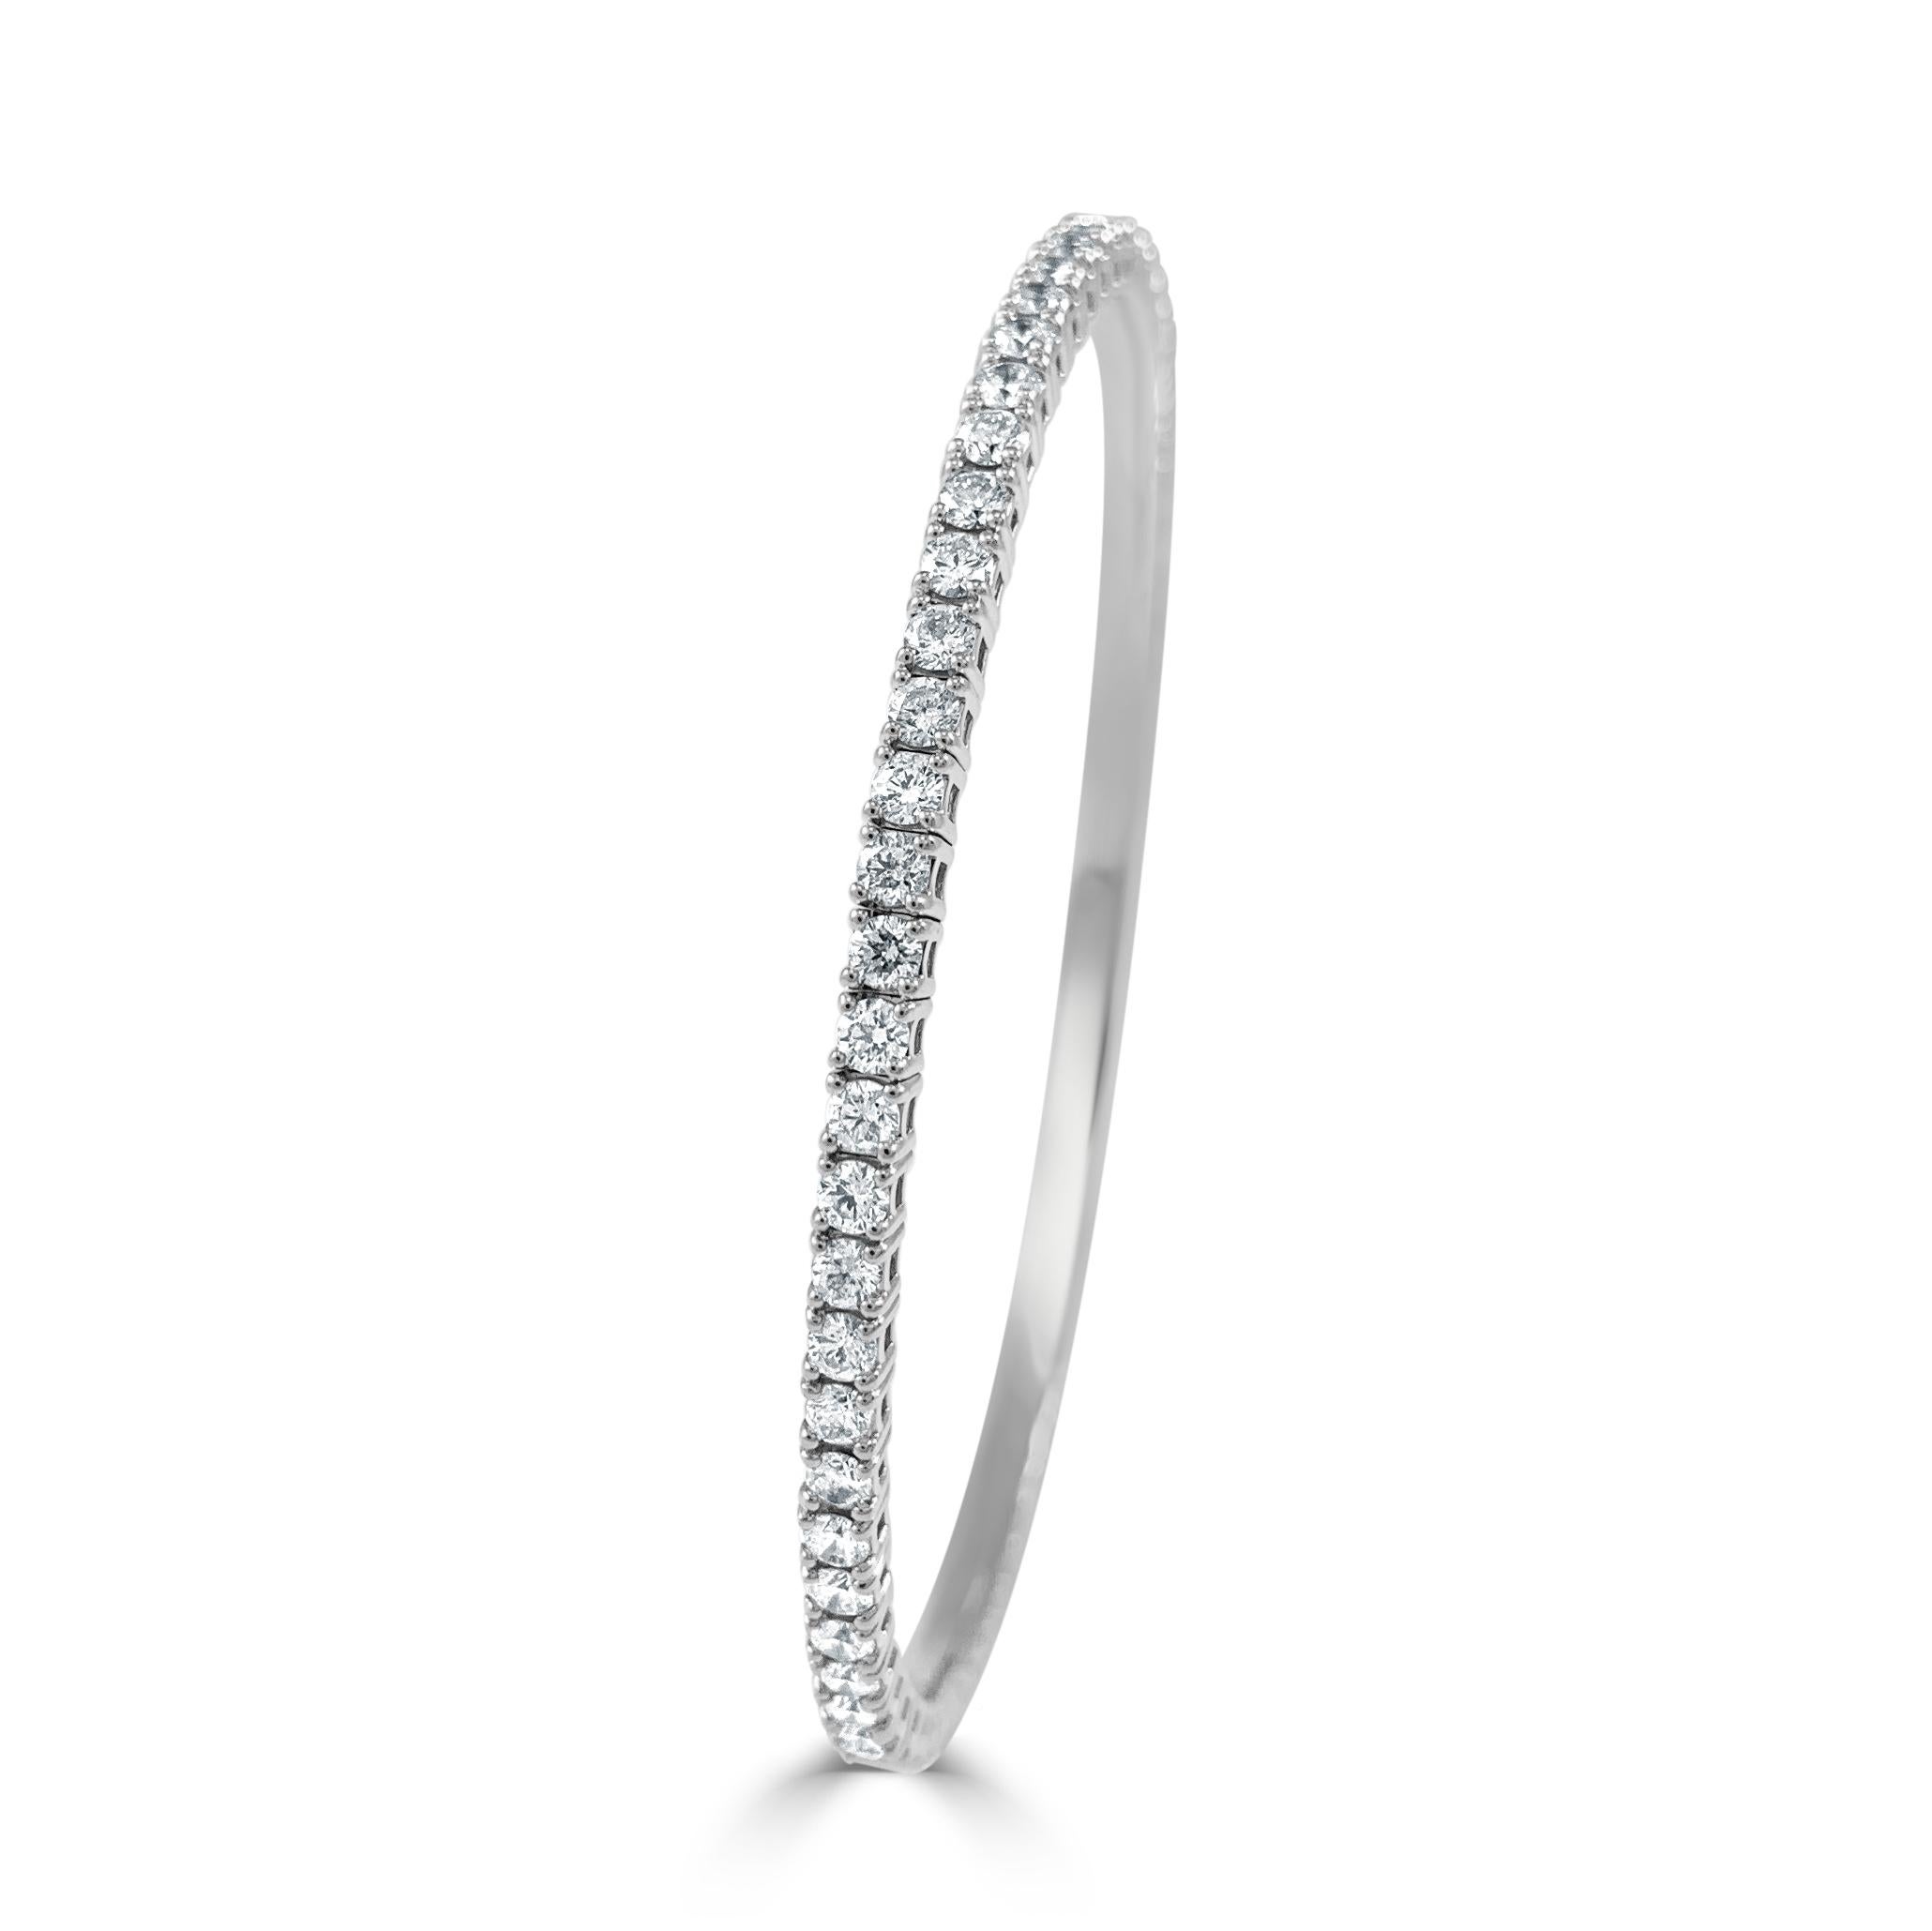 3ct diamond bracelet